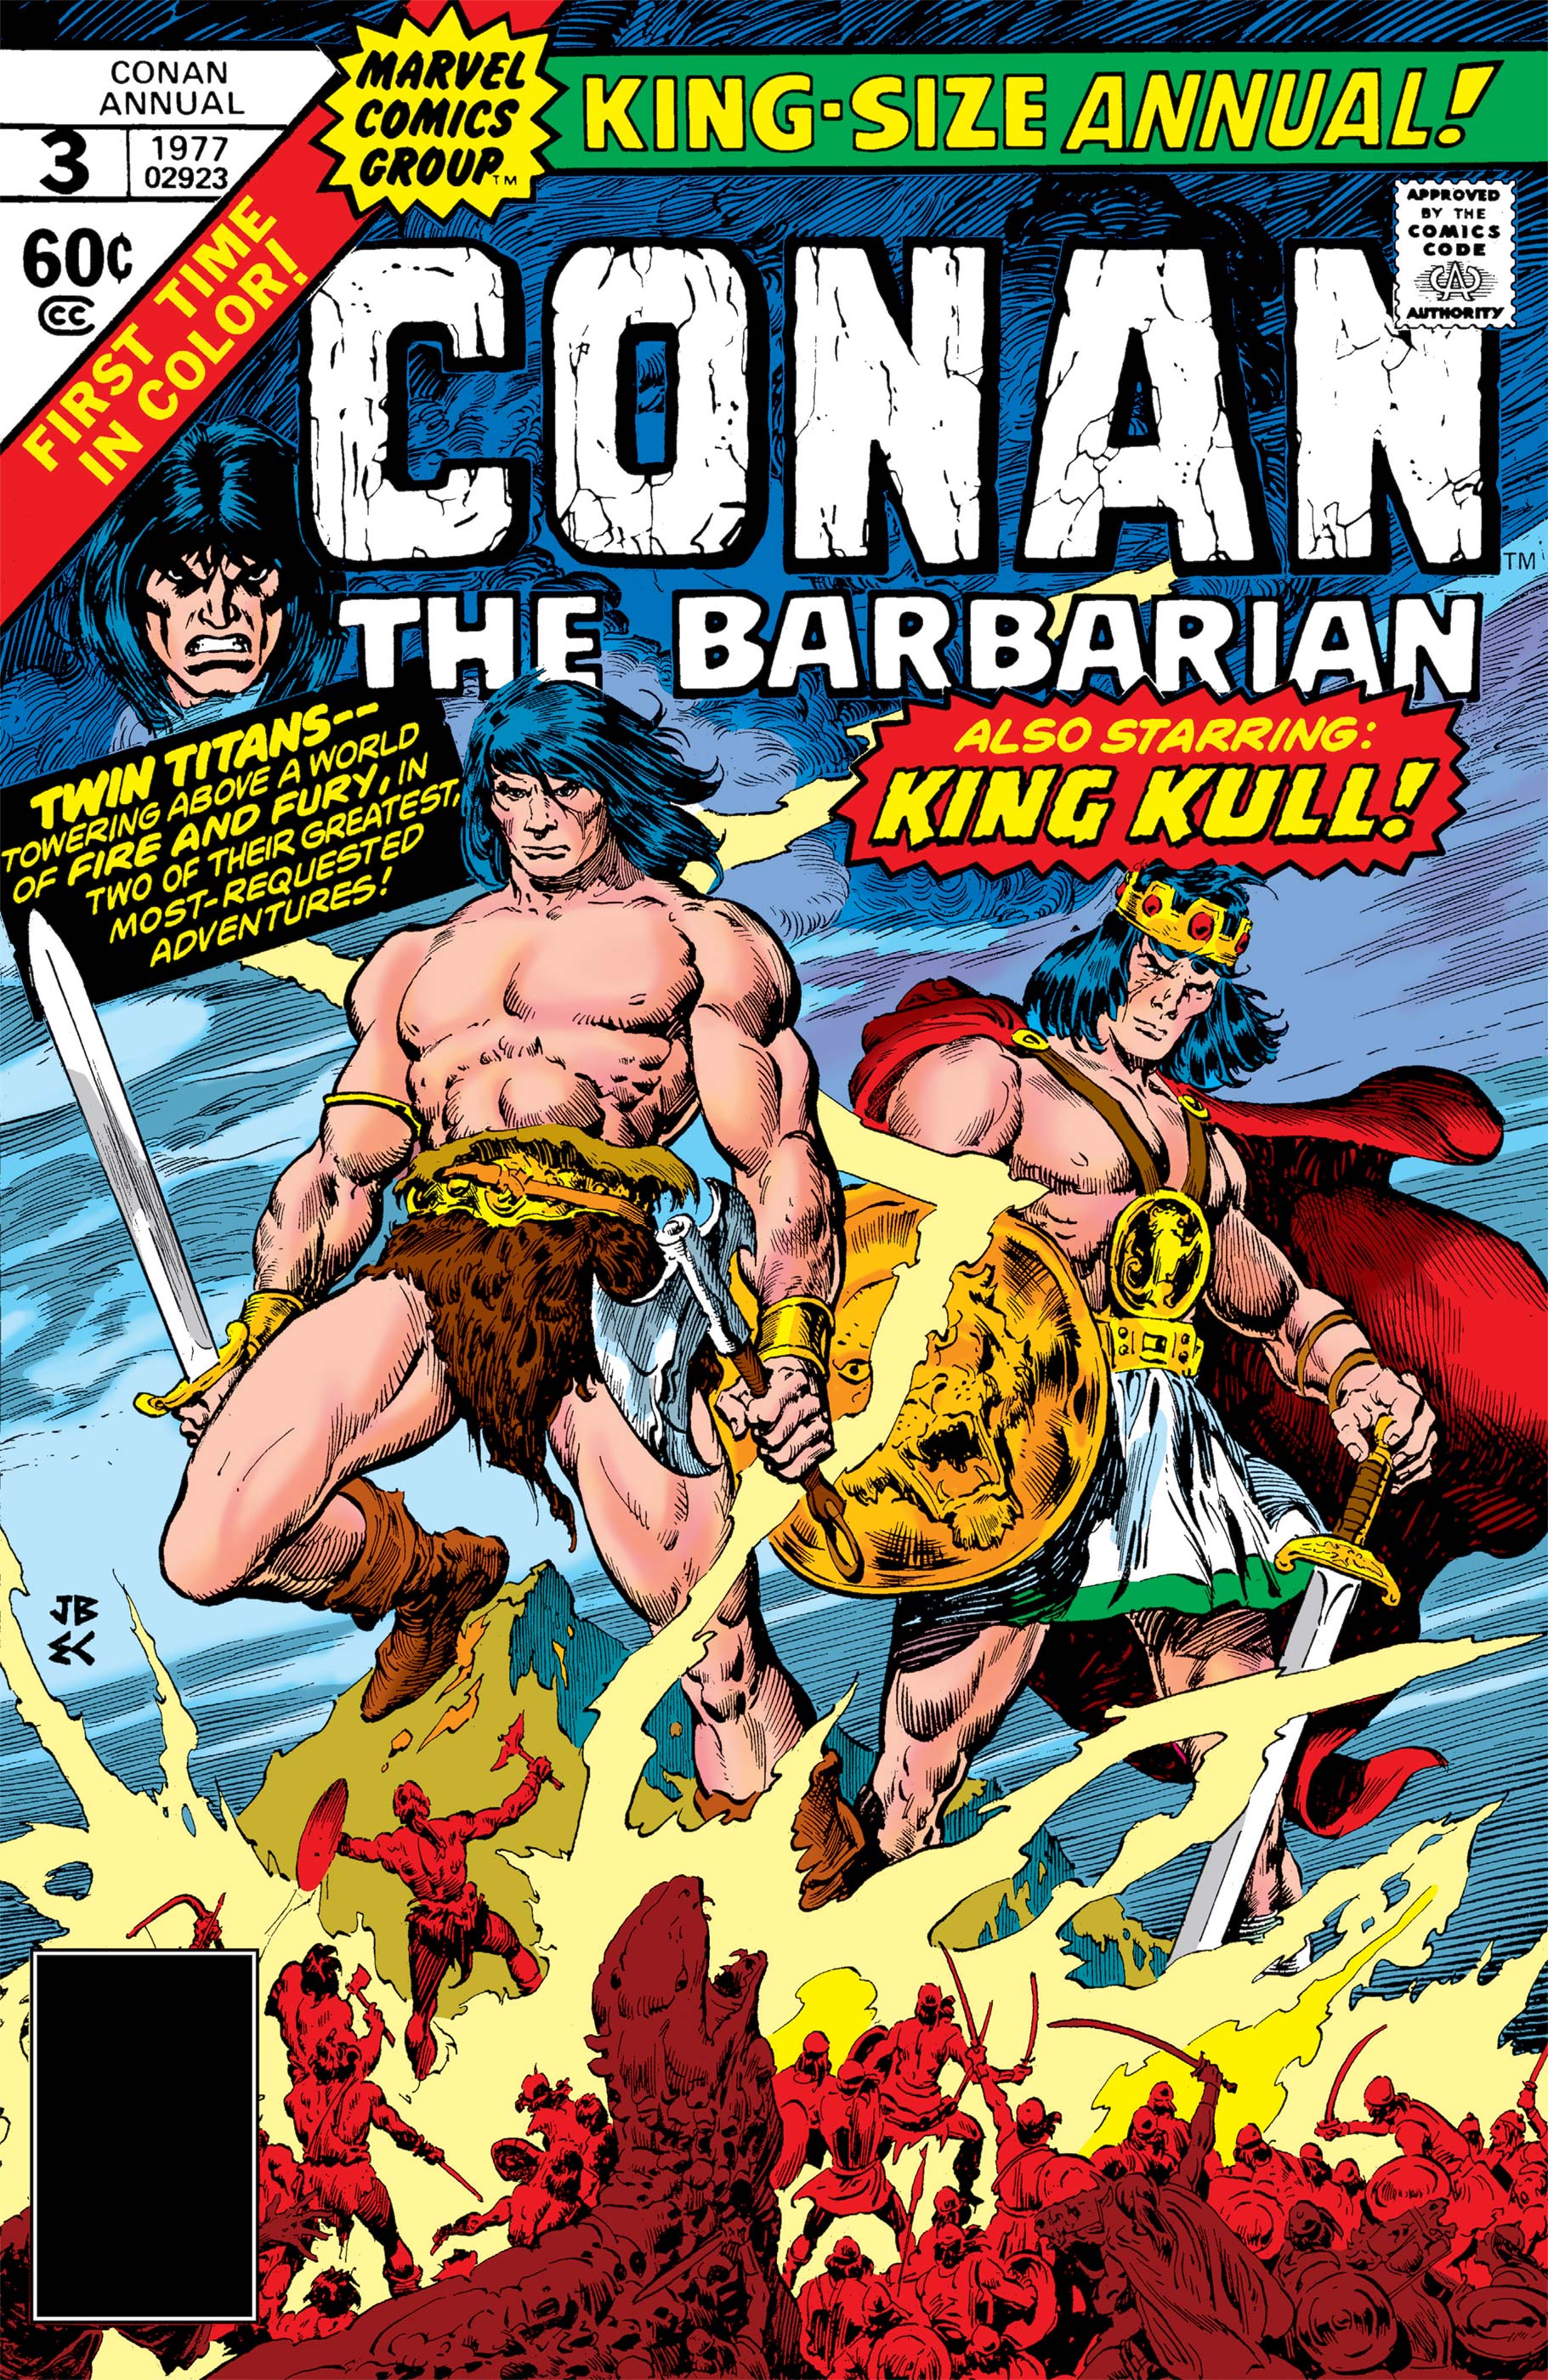 Conan Annual (1973) #3